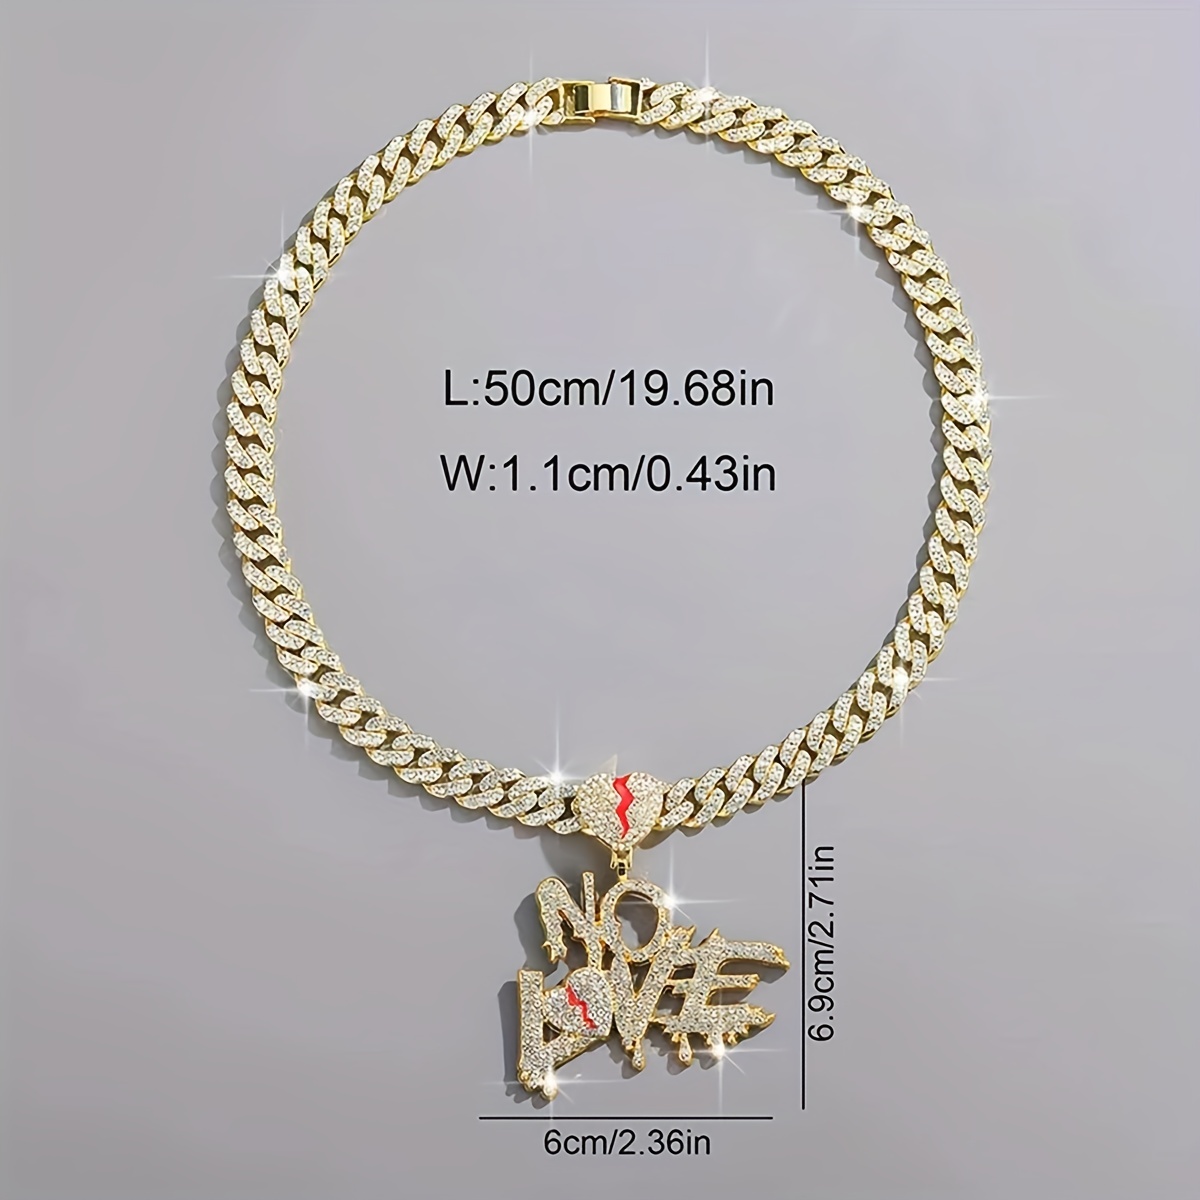 Louis Vuitton Nba Necklace woman